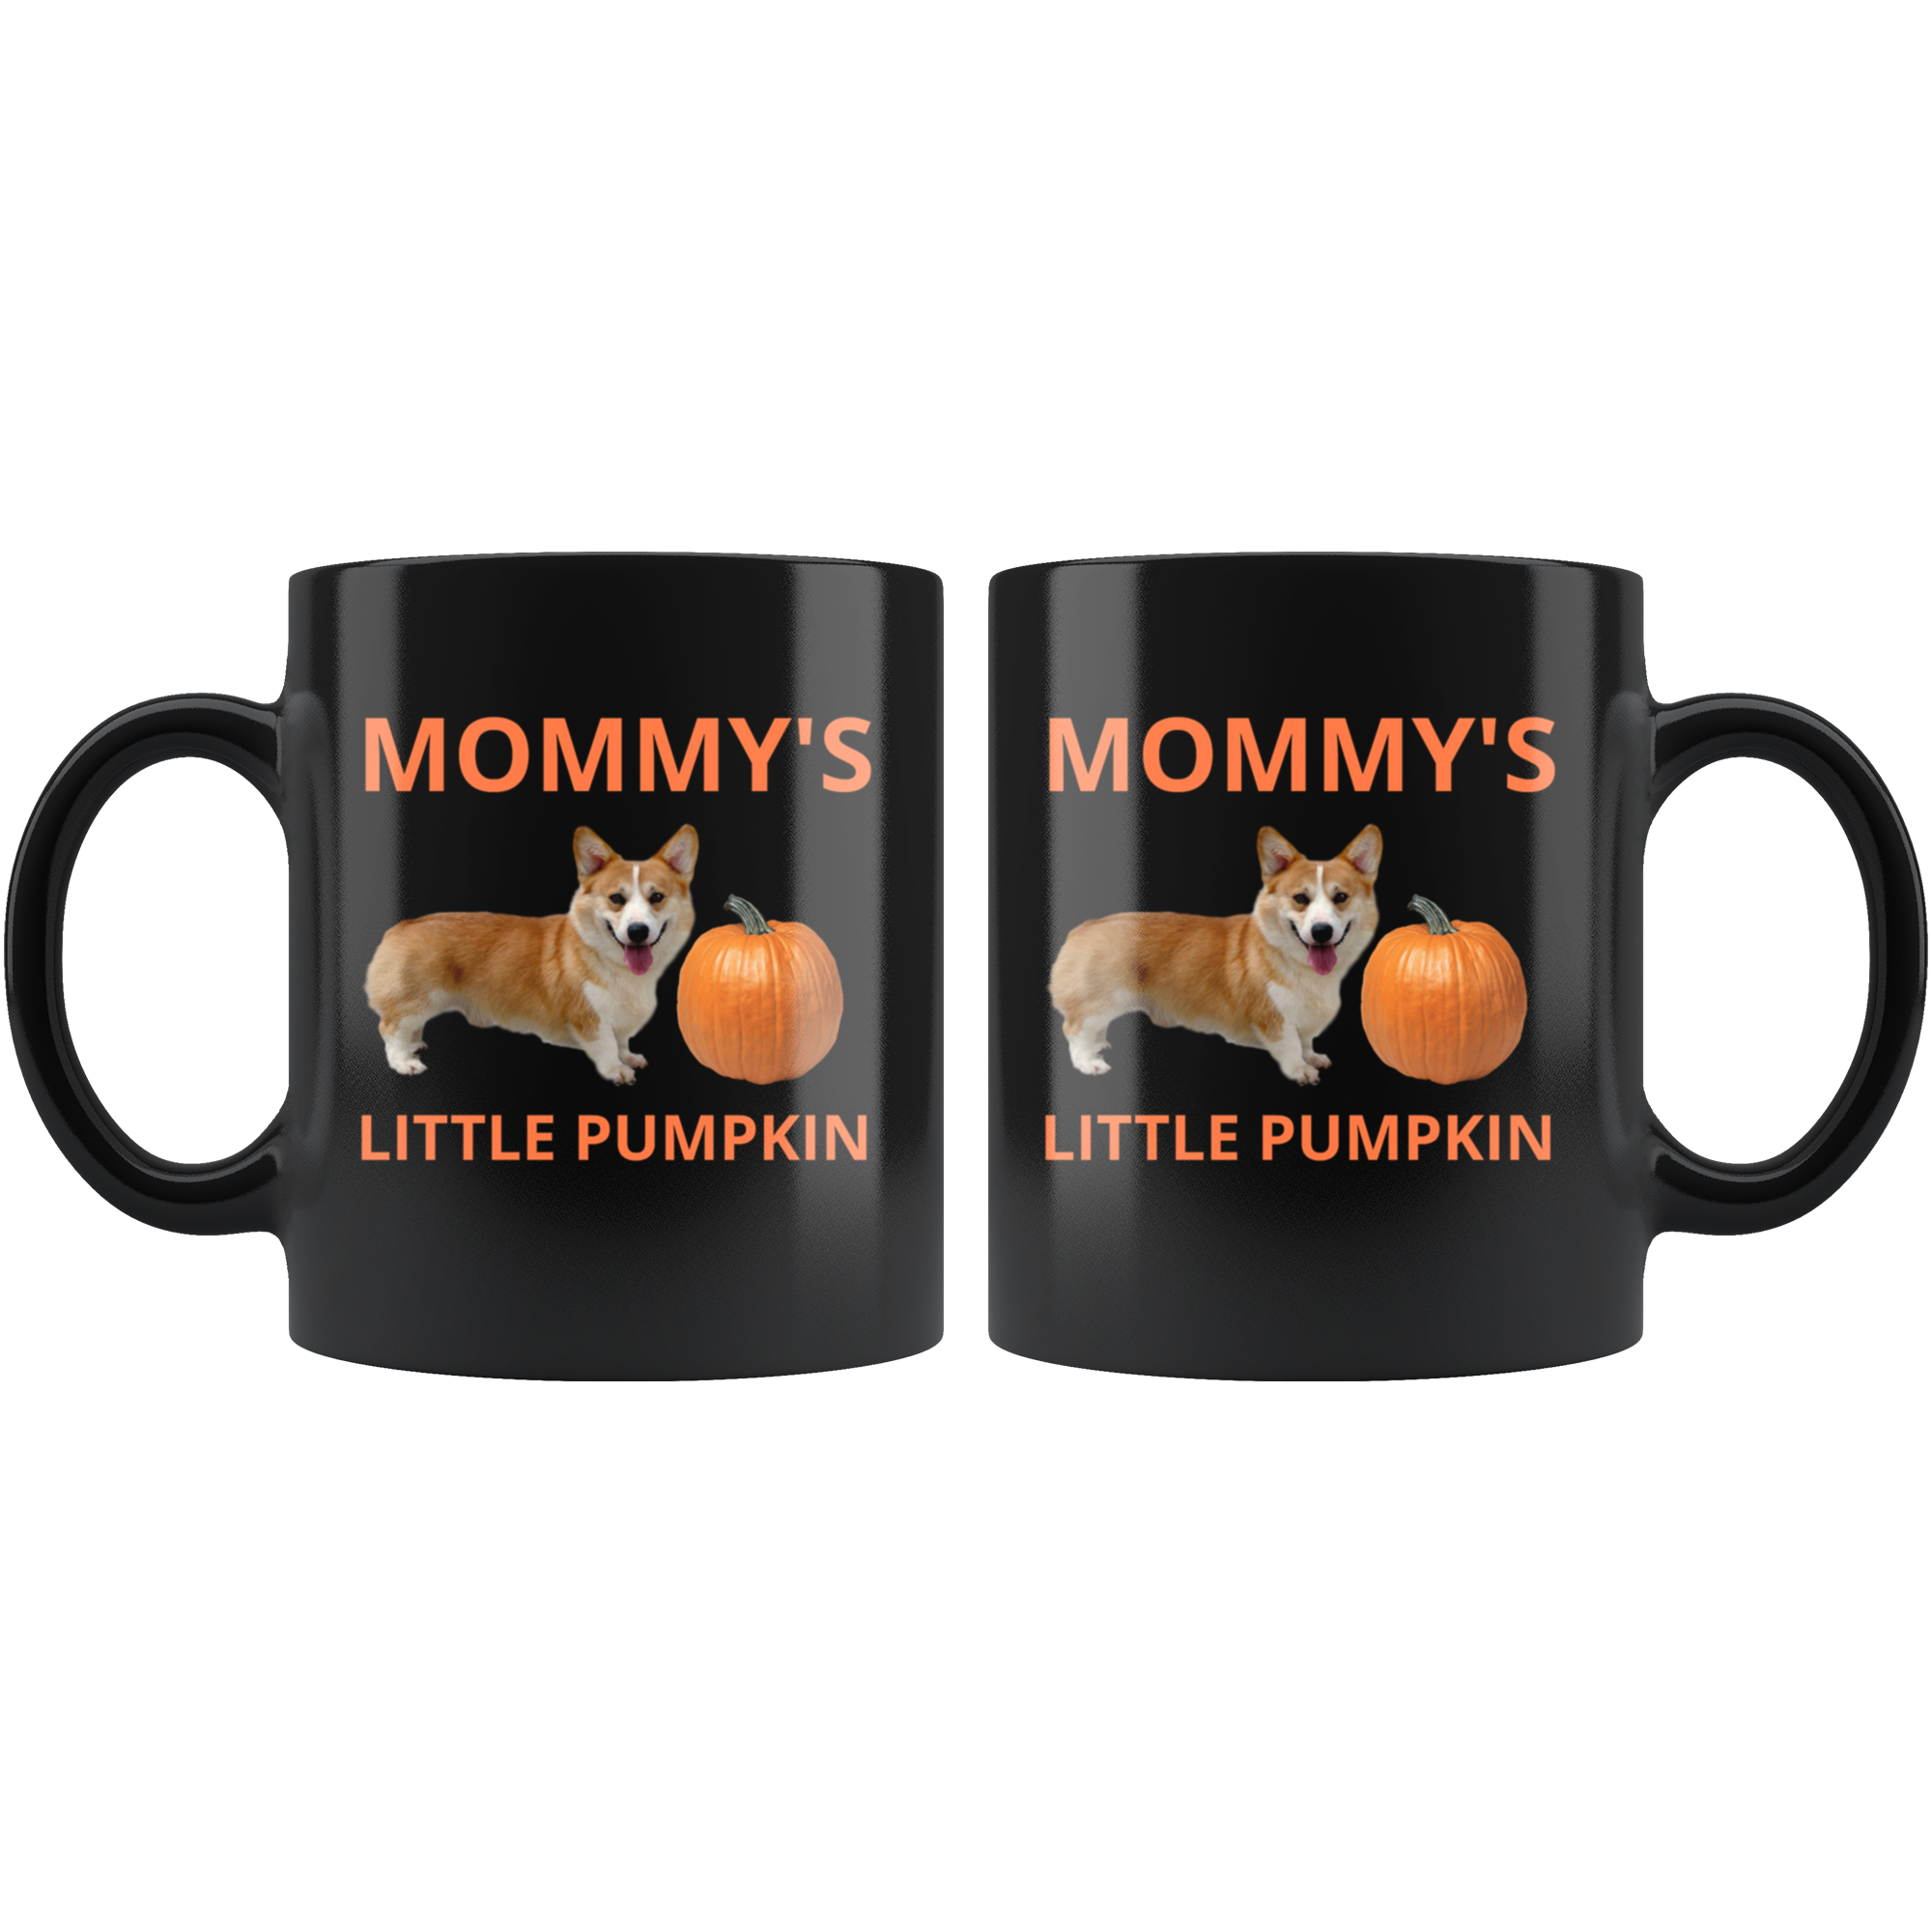 Mommy's Little Pumpkin Mug - Corgi